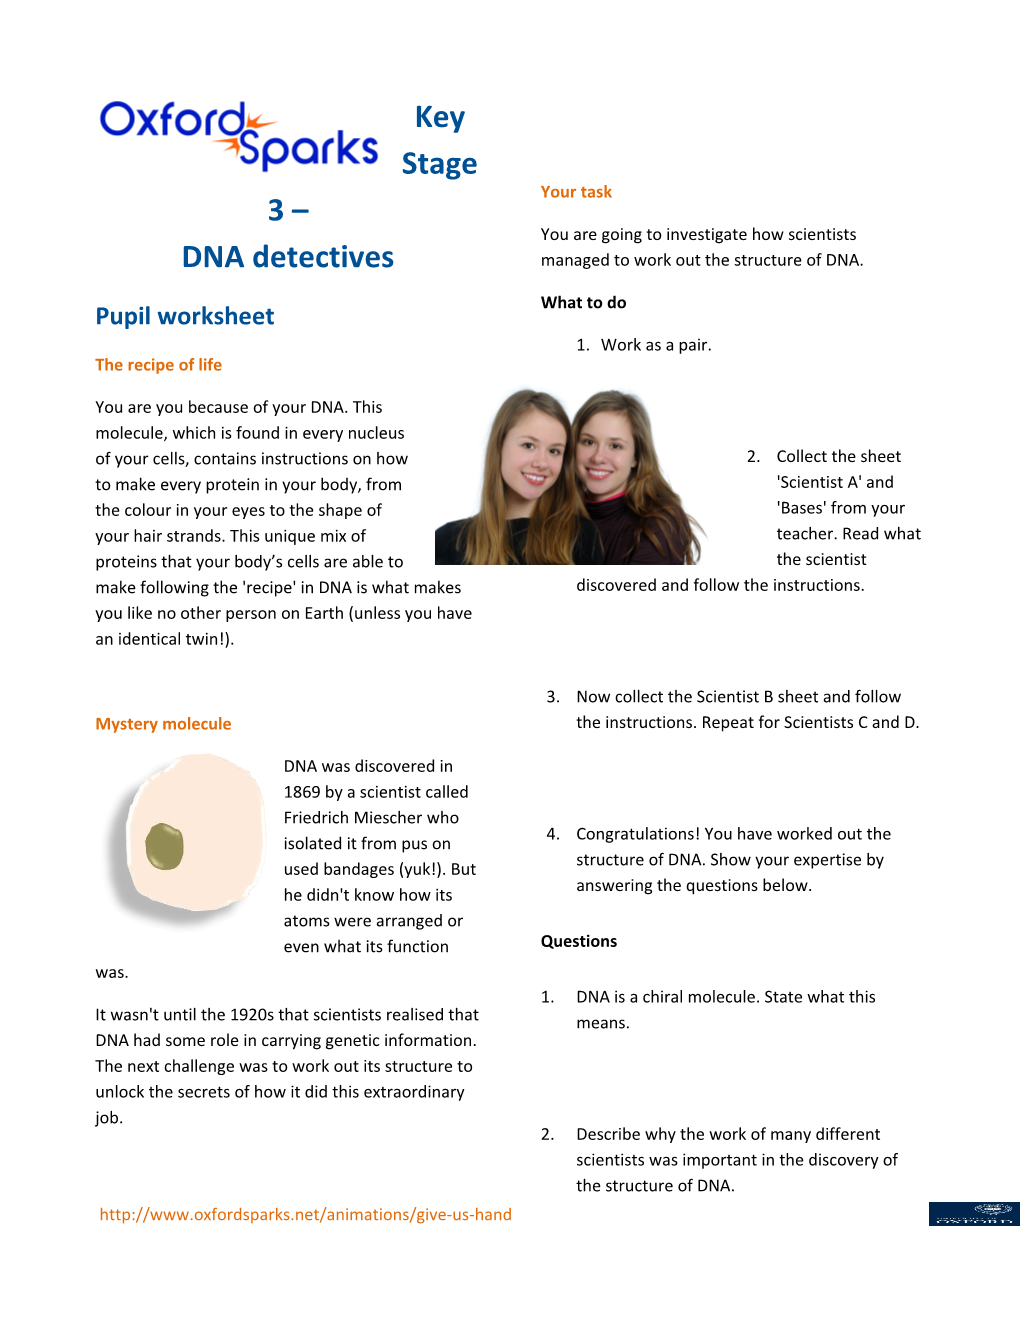 Key Stage 3 DNA Detectives